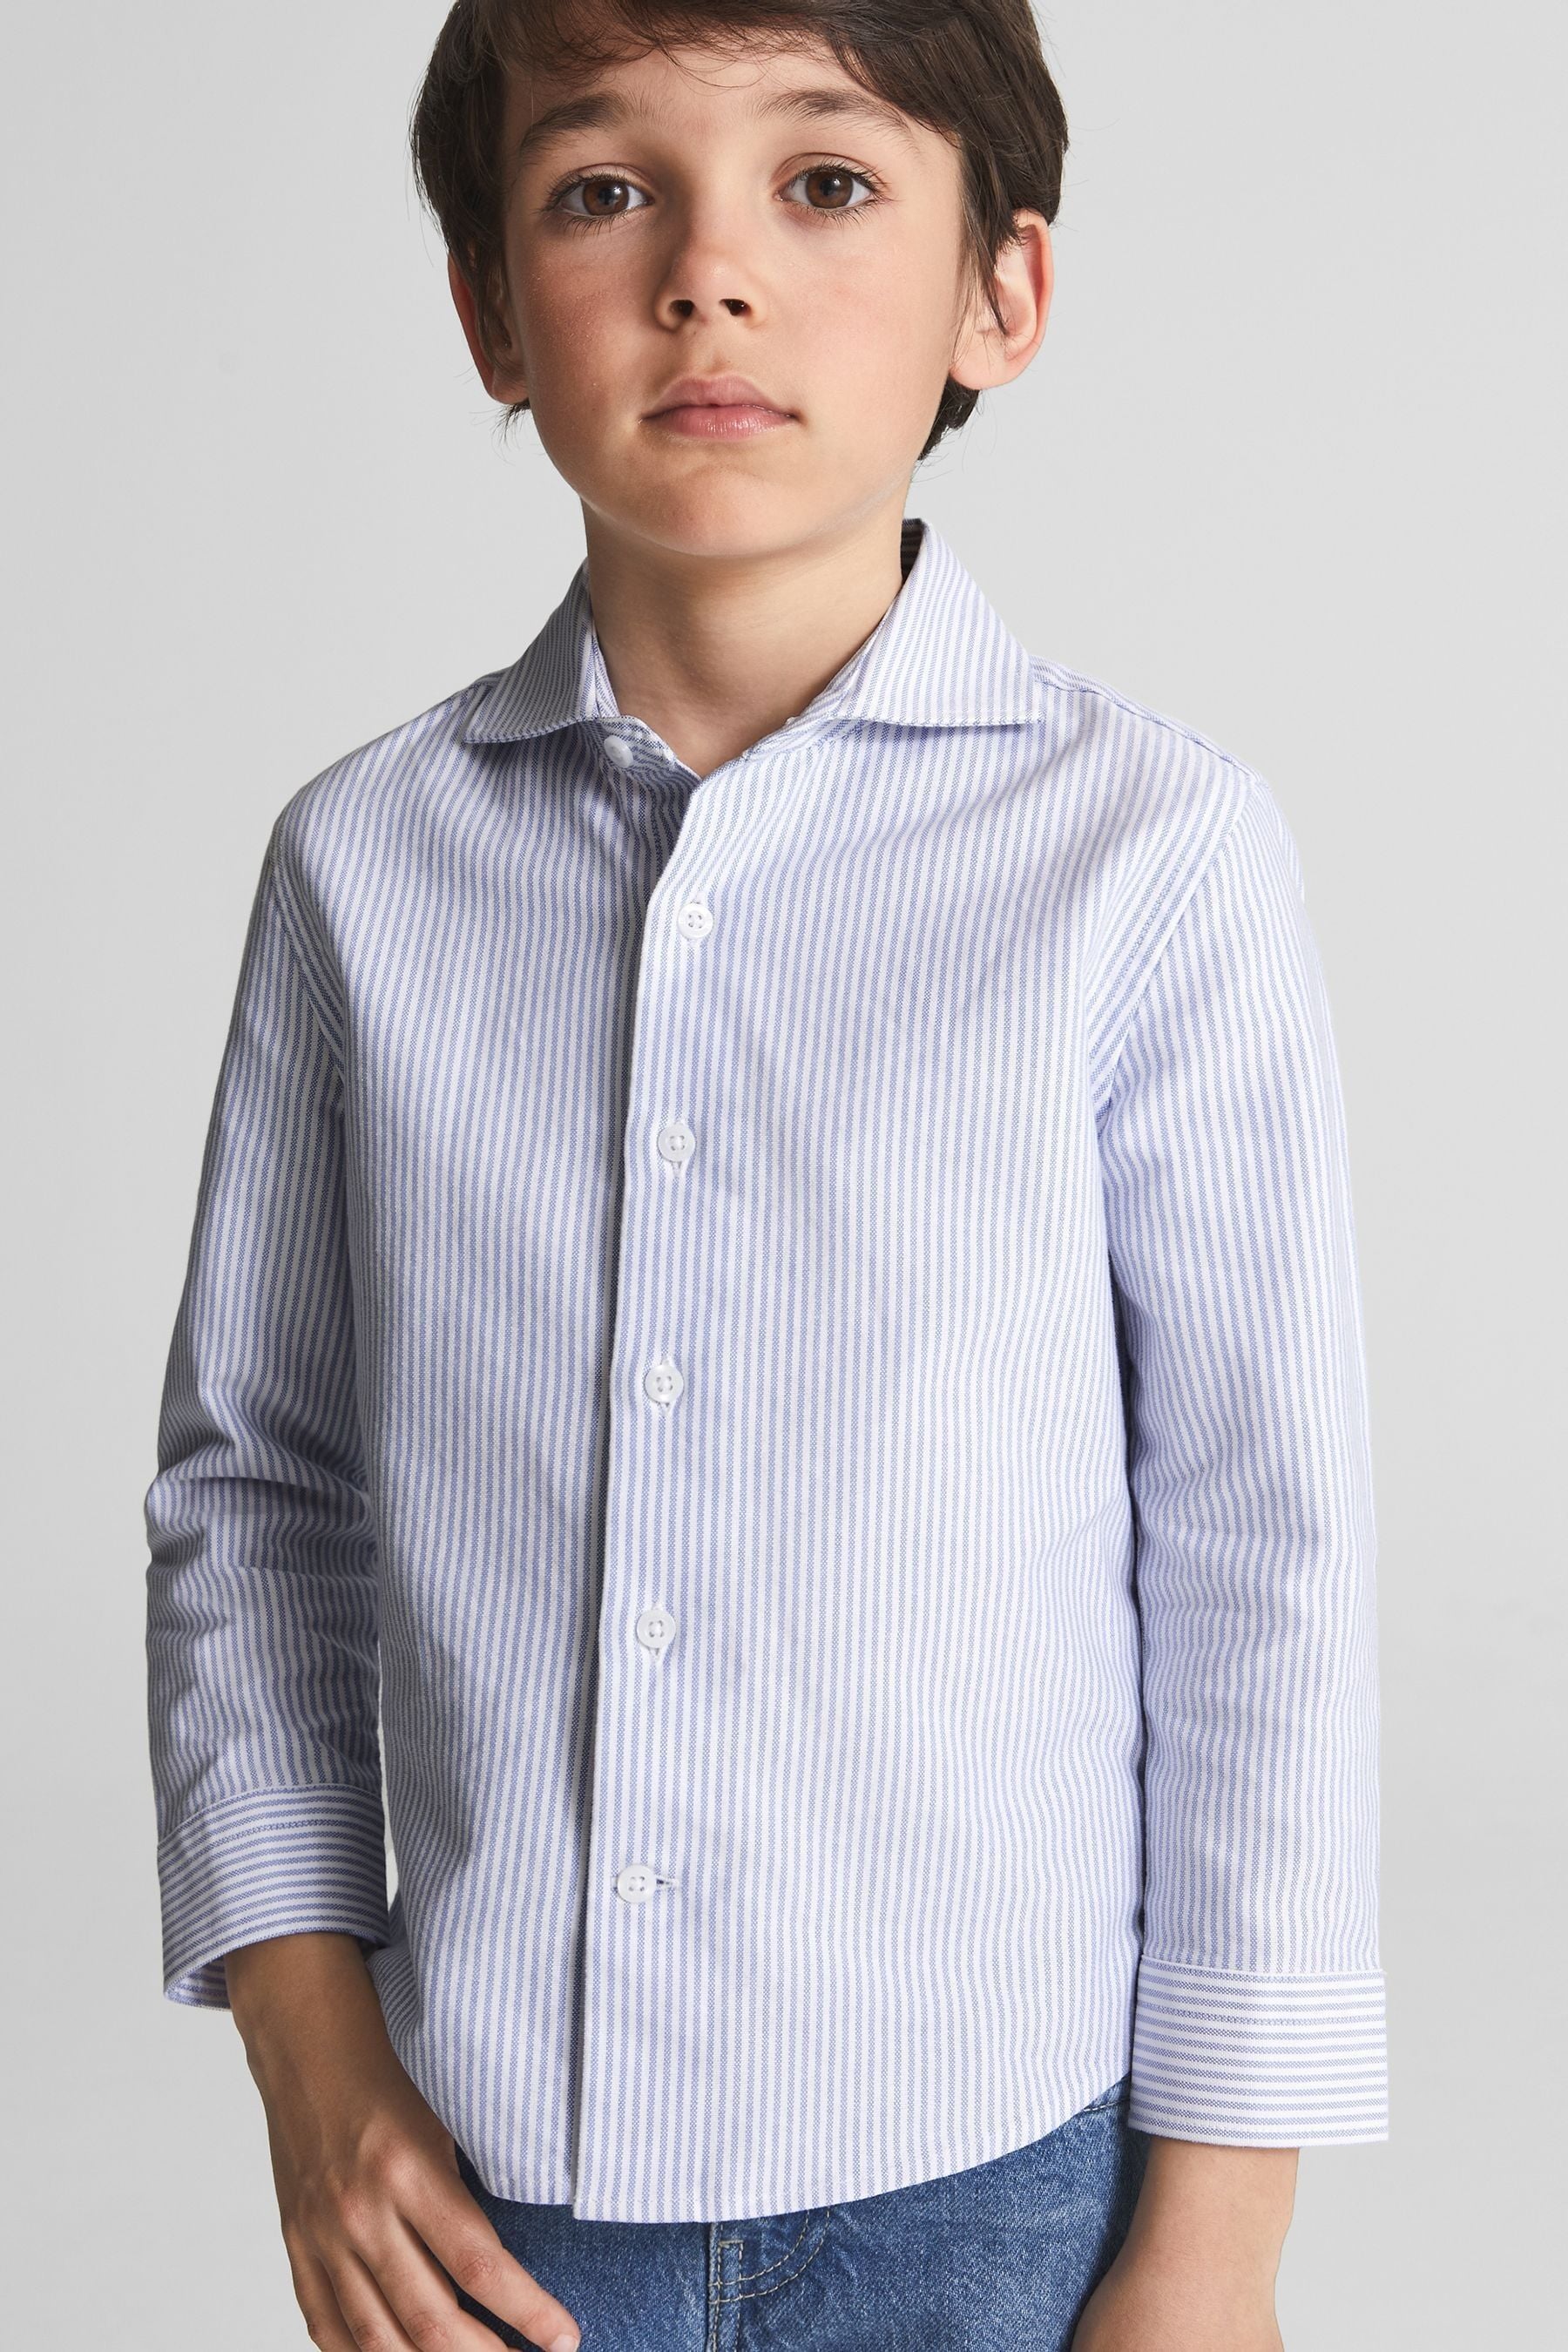 Reiss Kids' Blackheath - Blue Stripe Senior Striped Oxford Shirt, Uk 9-10 Yrs